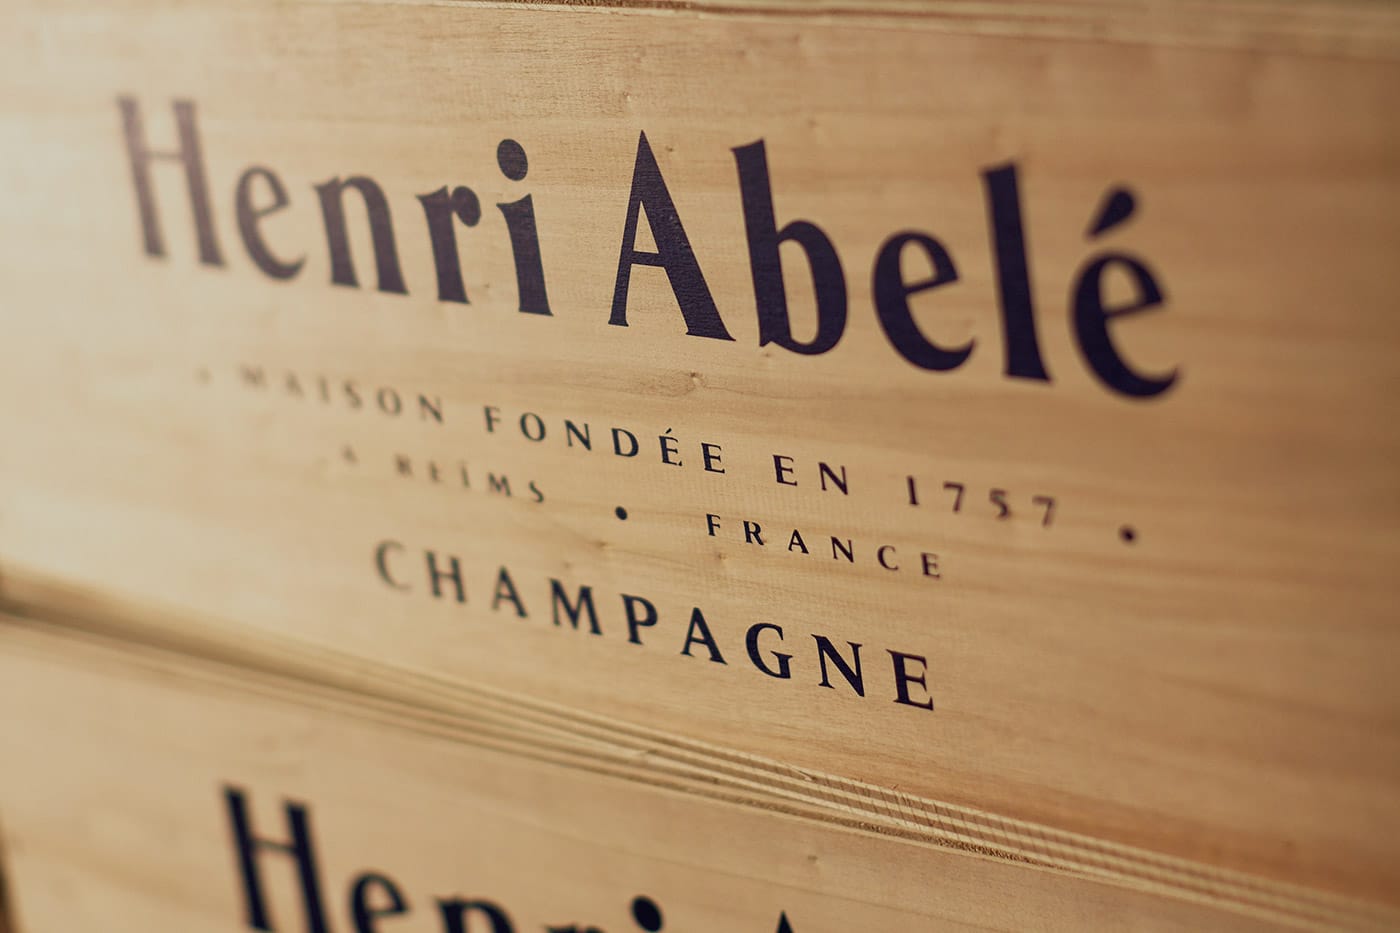 Kotak anggur Henri Abele Champagne